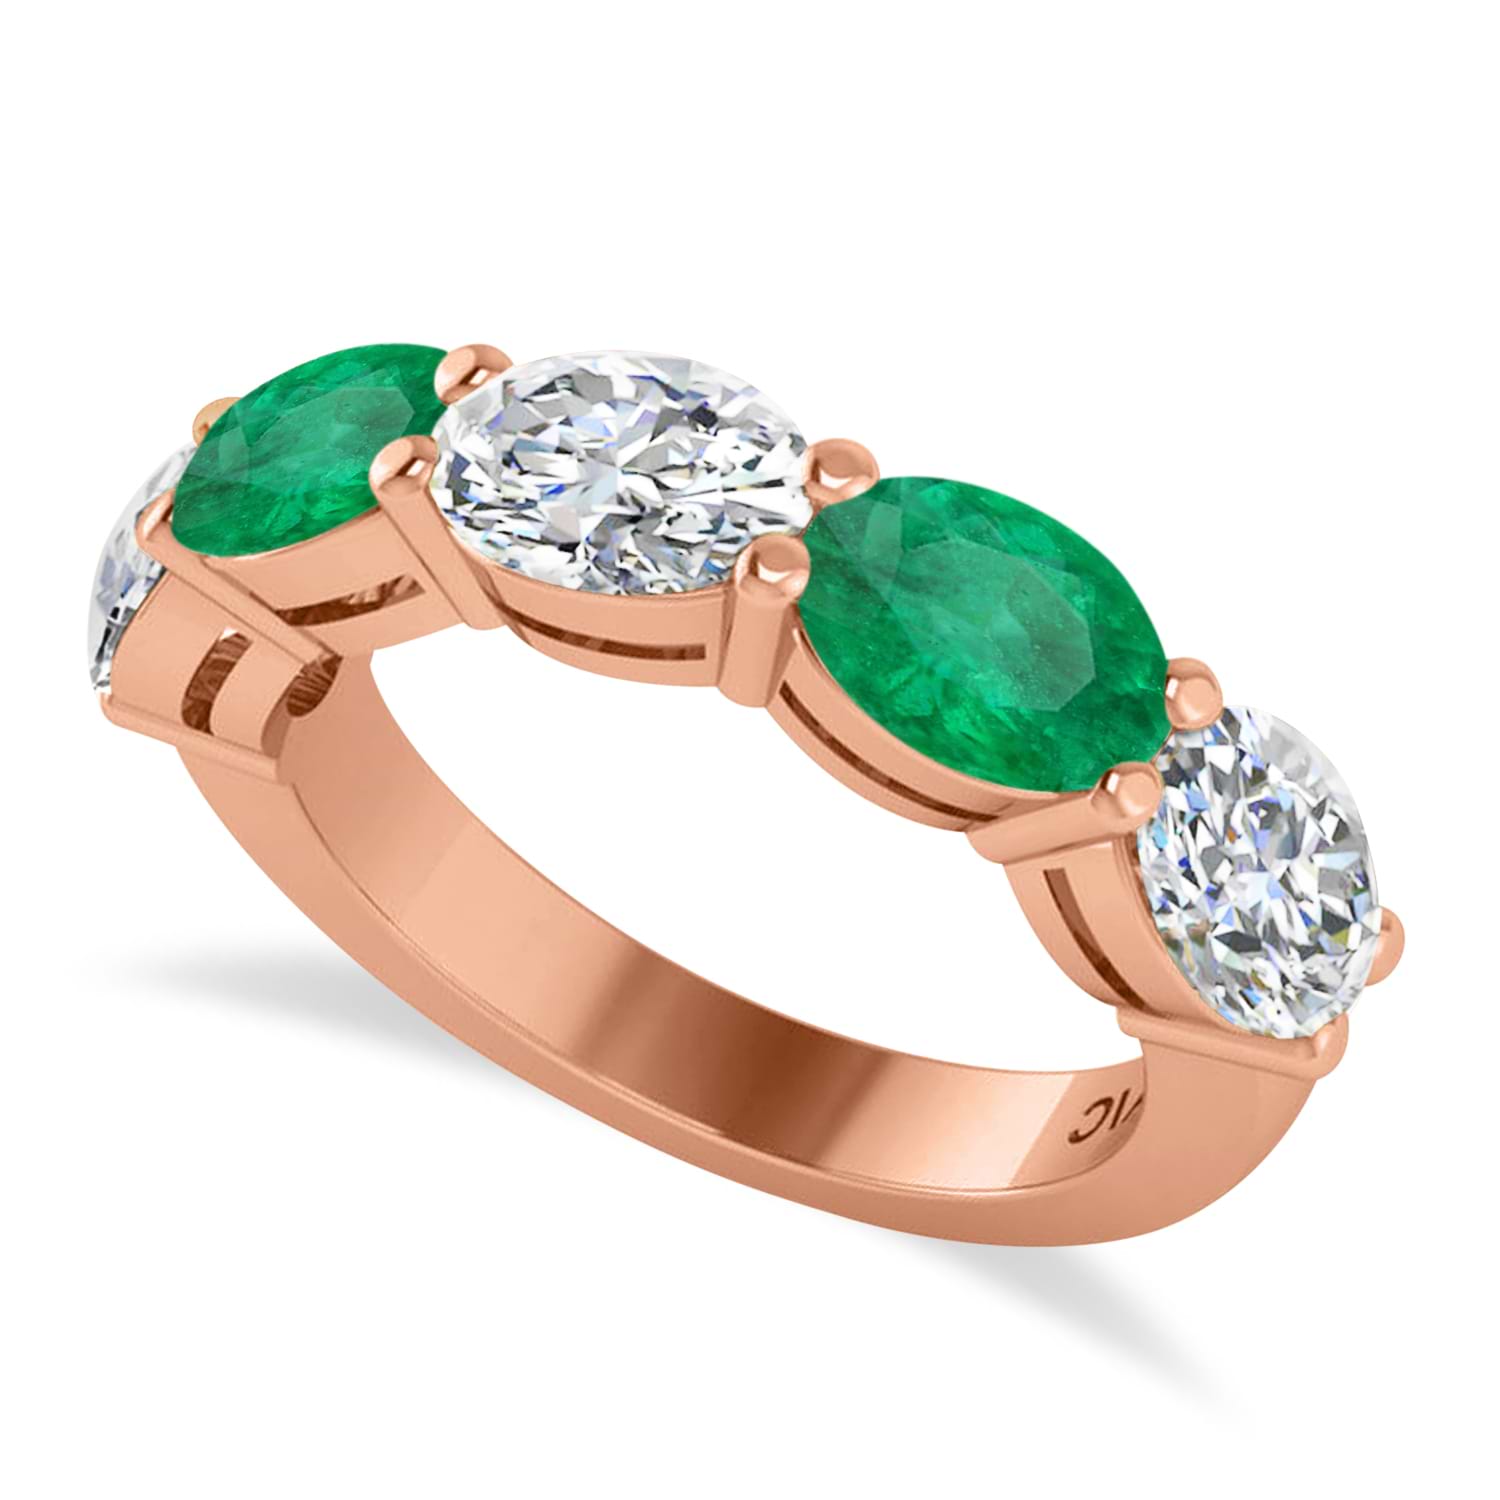 Oval Diamond & Emerald Five Stone Ring 14k Rose Gold (4.70ct)